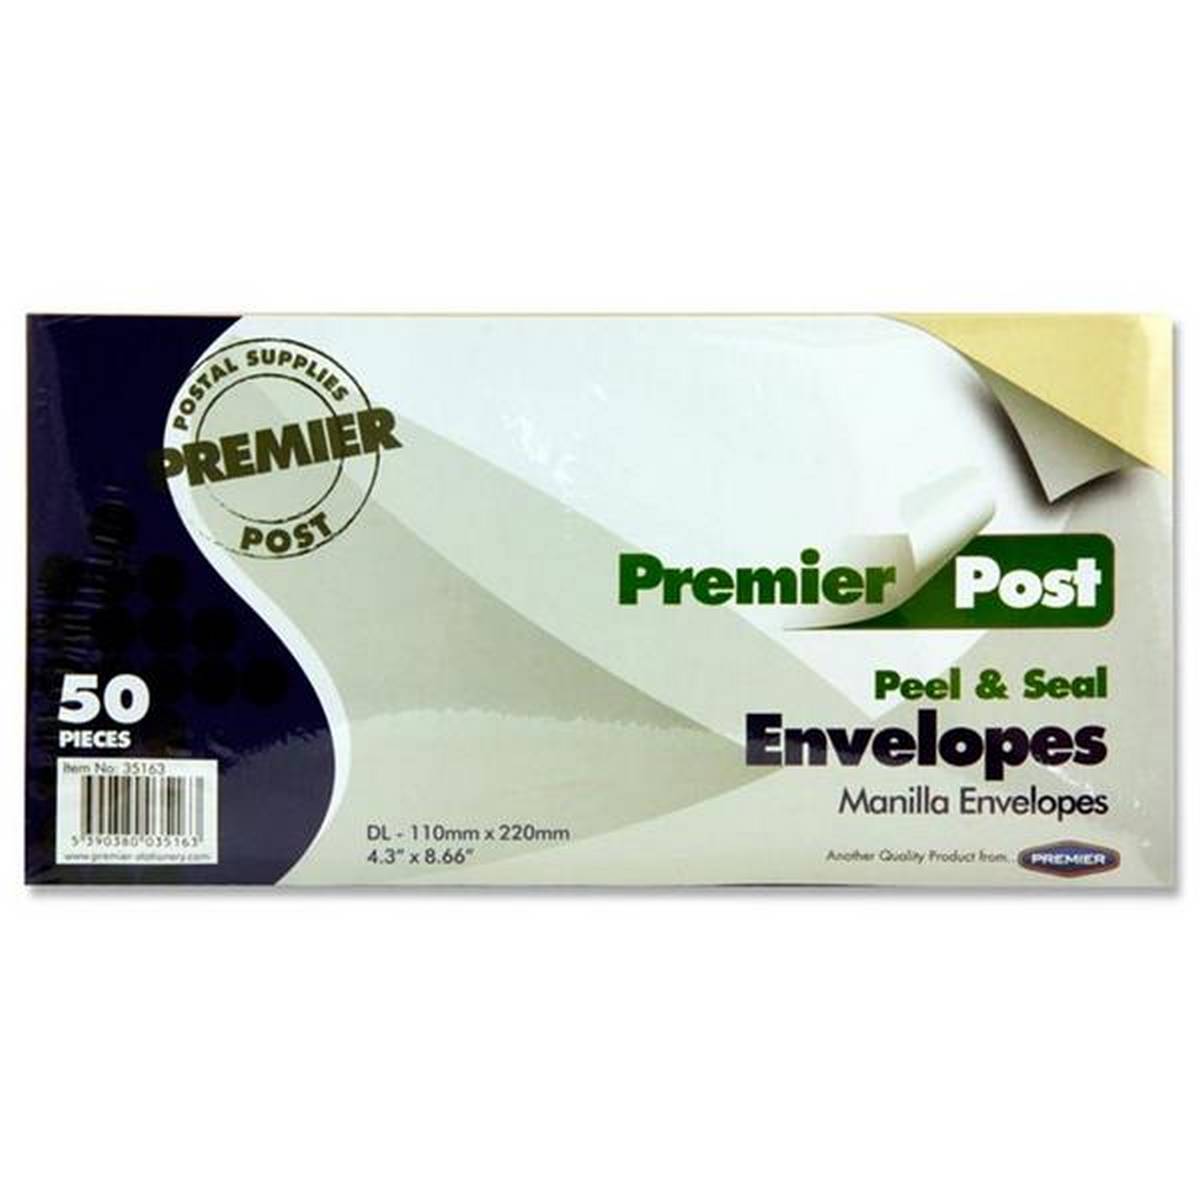 Peel & Seal DL Envelopes Pack of 50 - Manilla